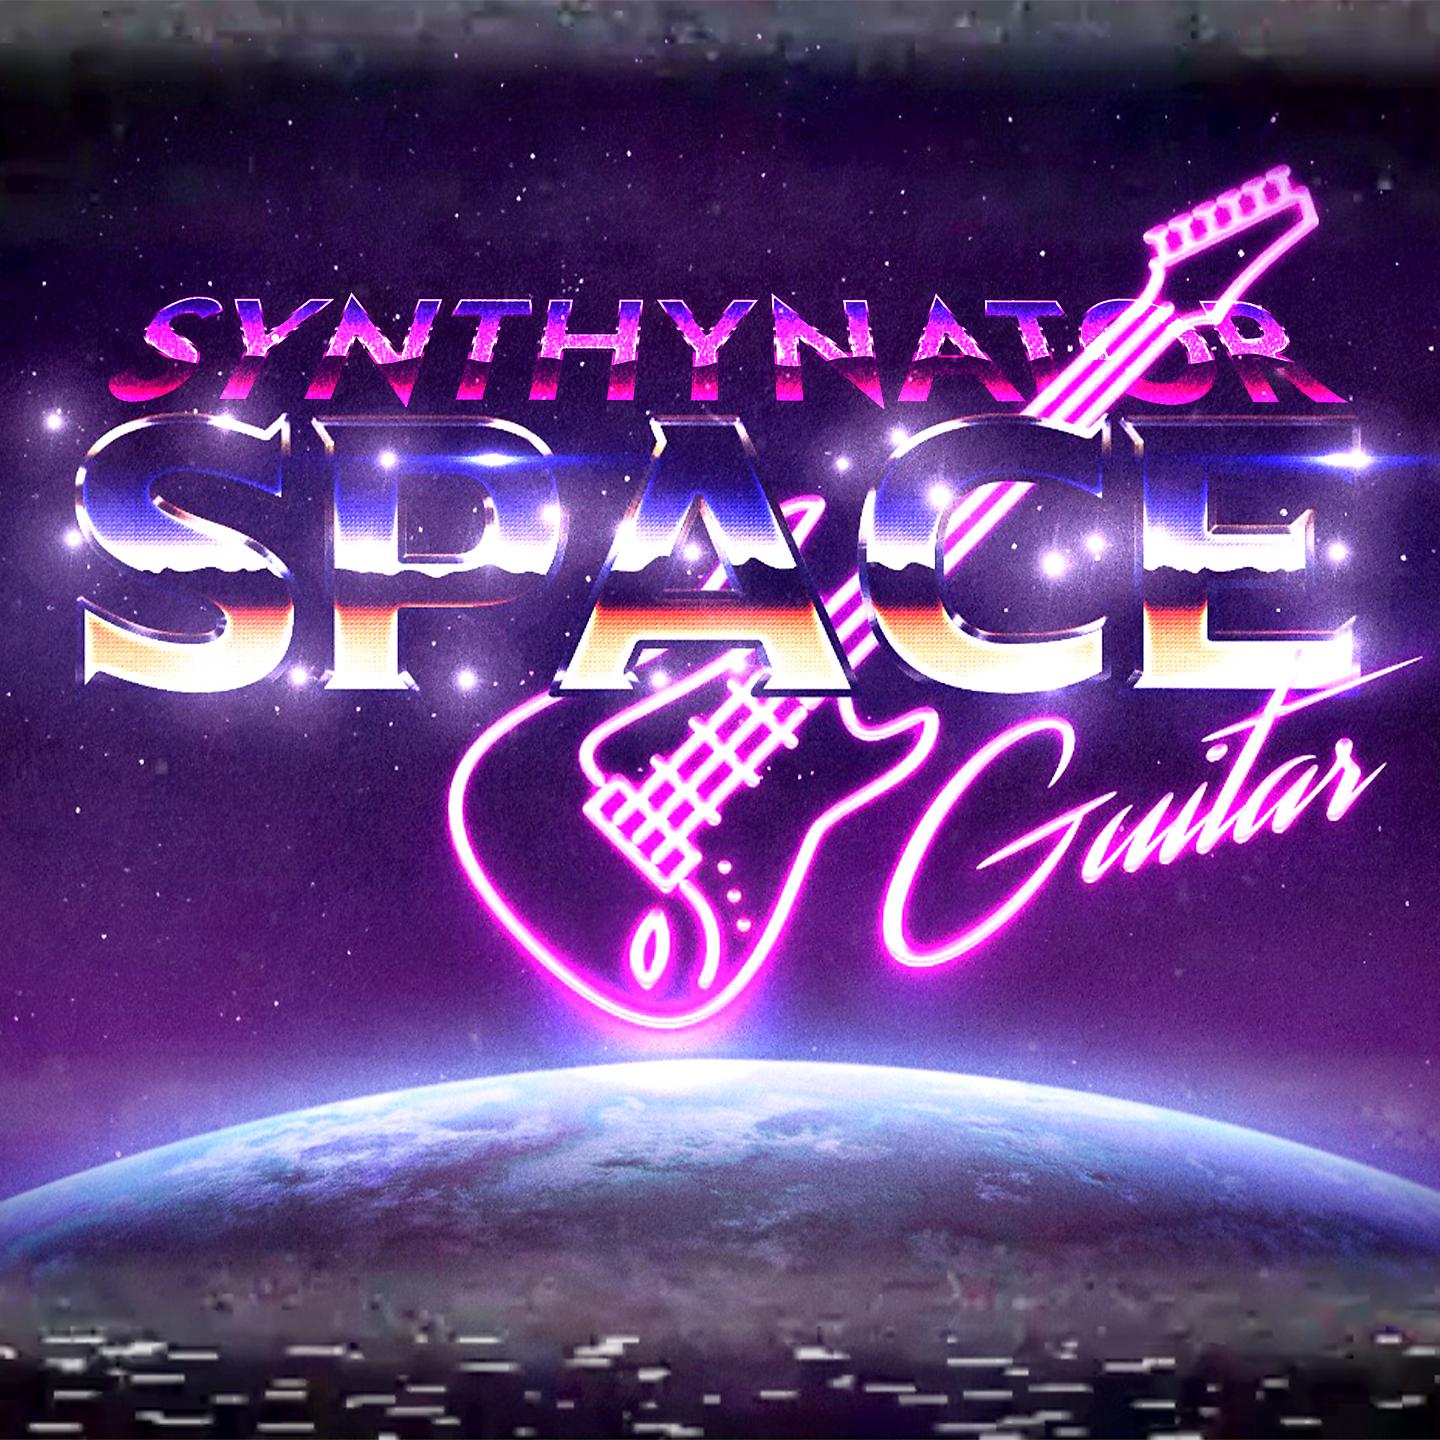 Постер альбома Space Guitar